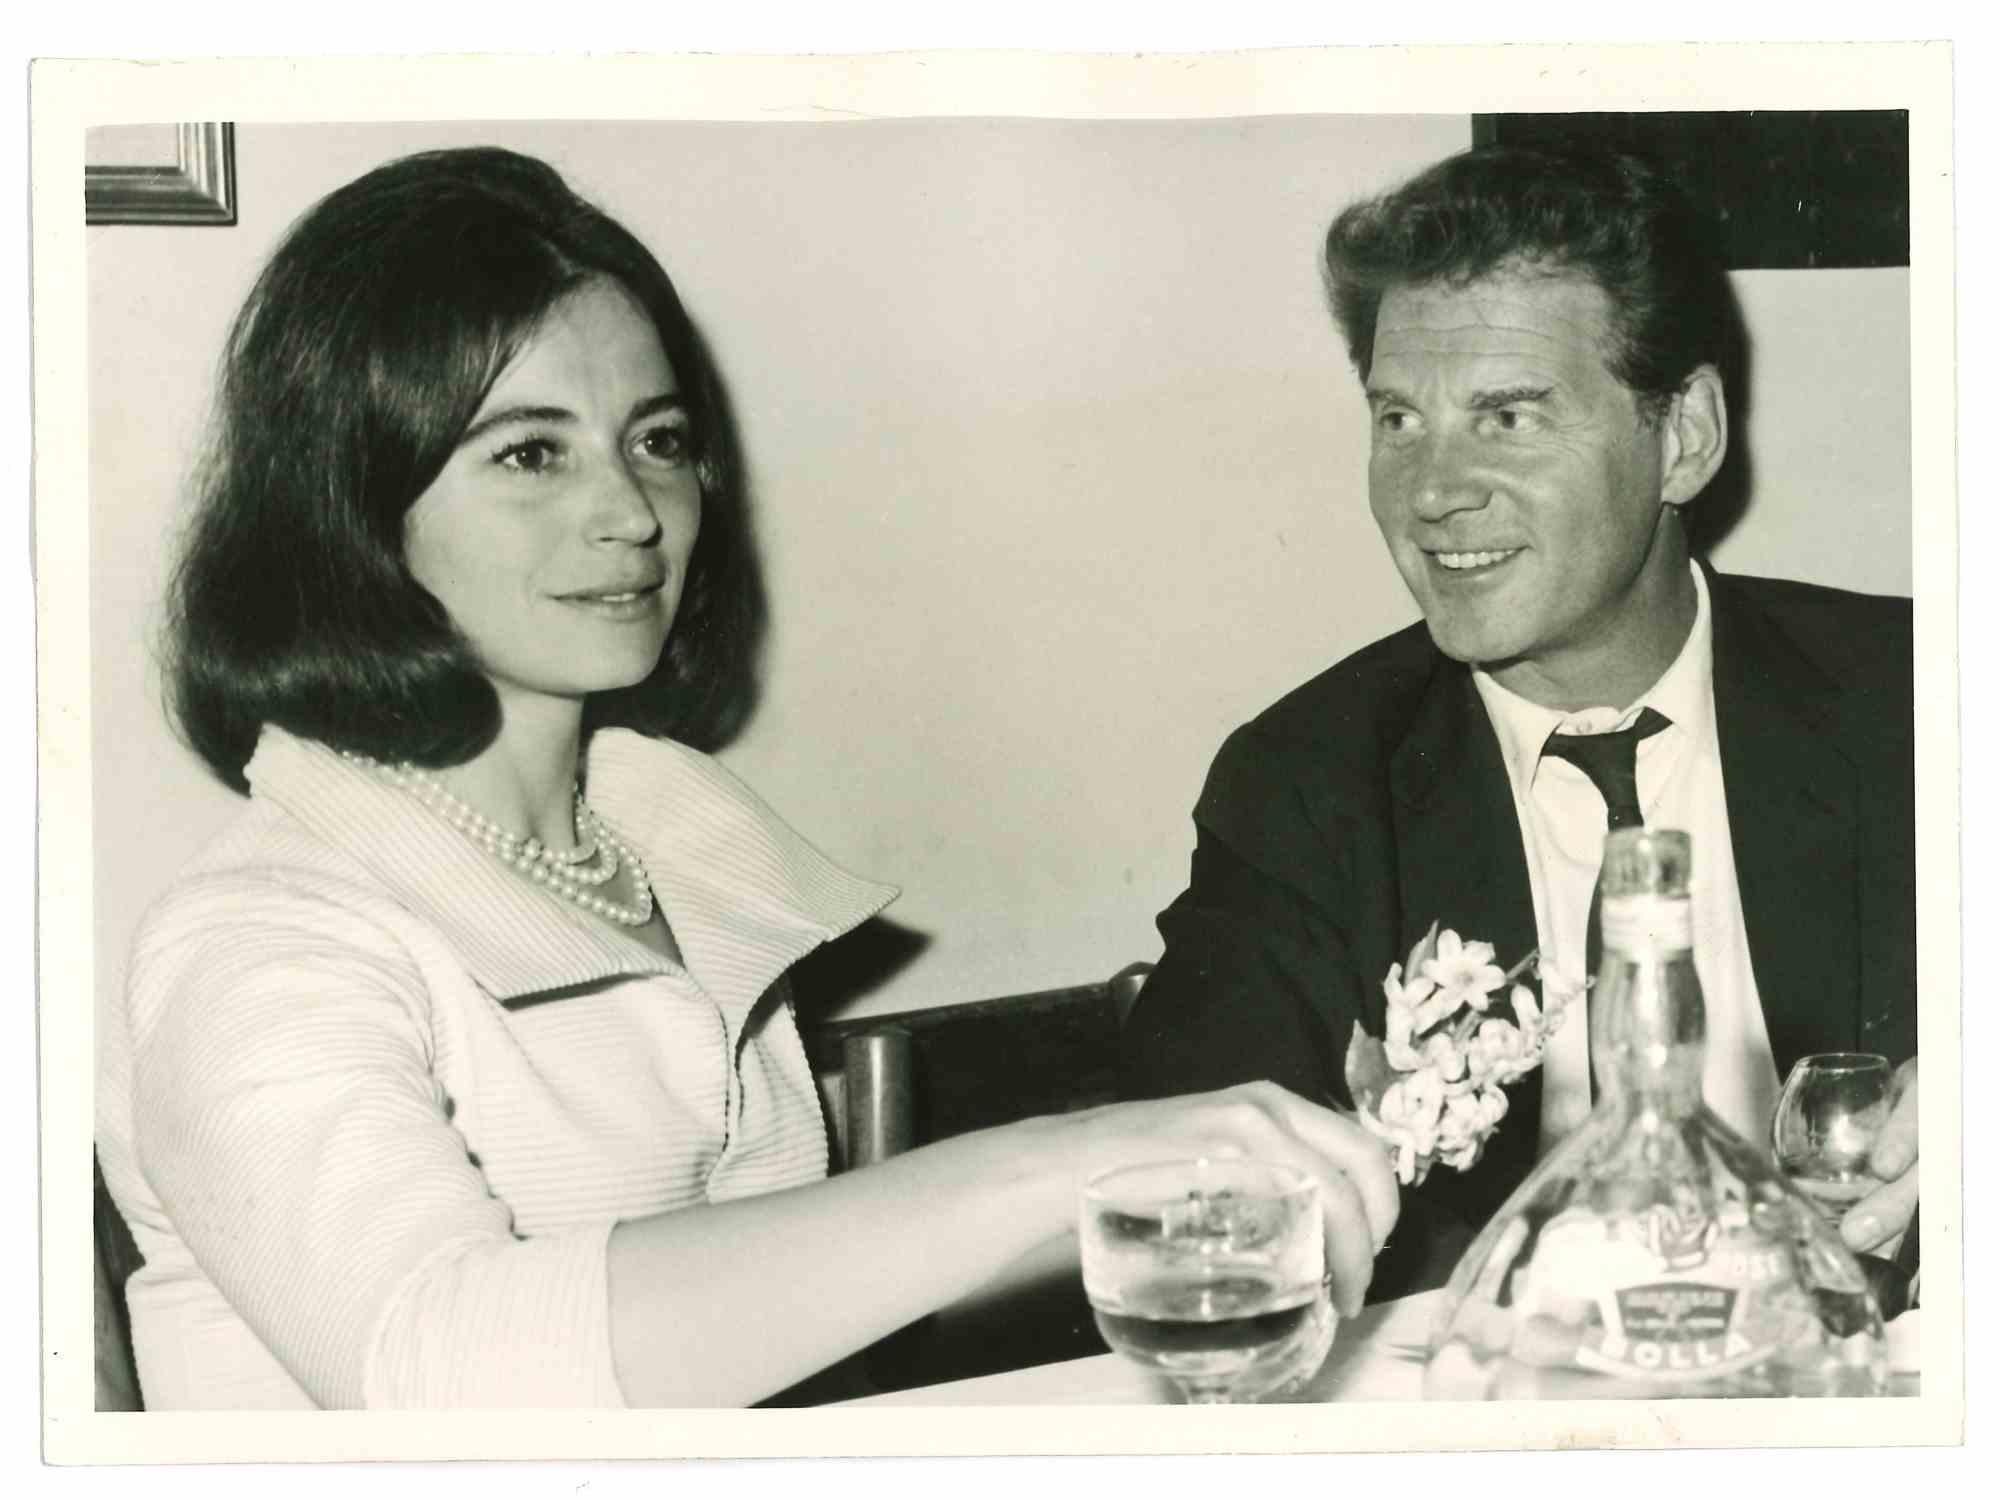 Unknown Black and White Photograph - Marisa Pavan and Jean-Pierre Aumont - Vintage Photo - Vintage Photo - 1970s